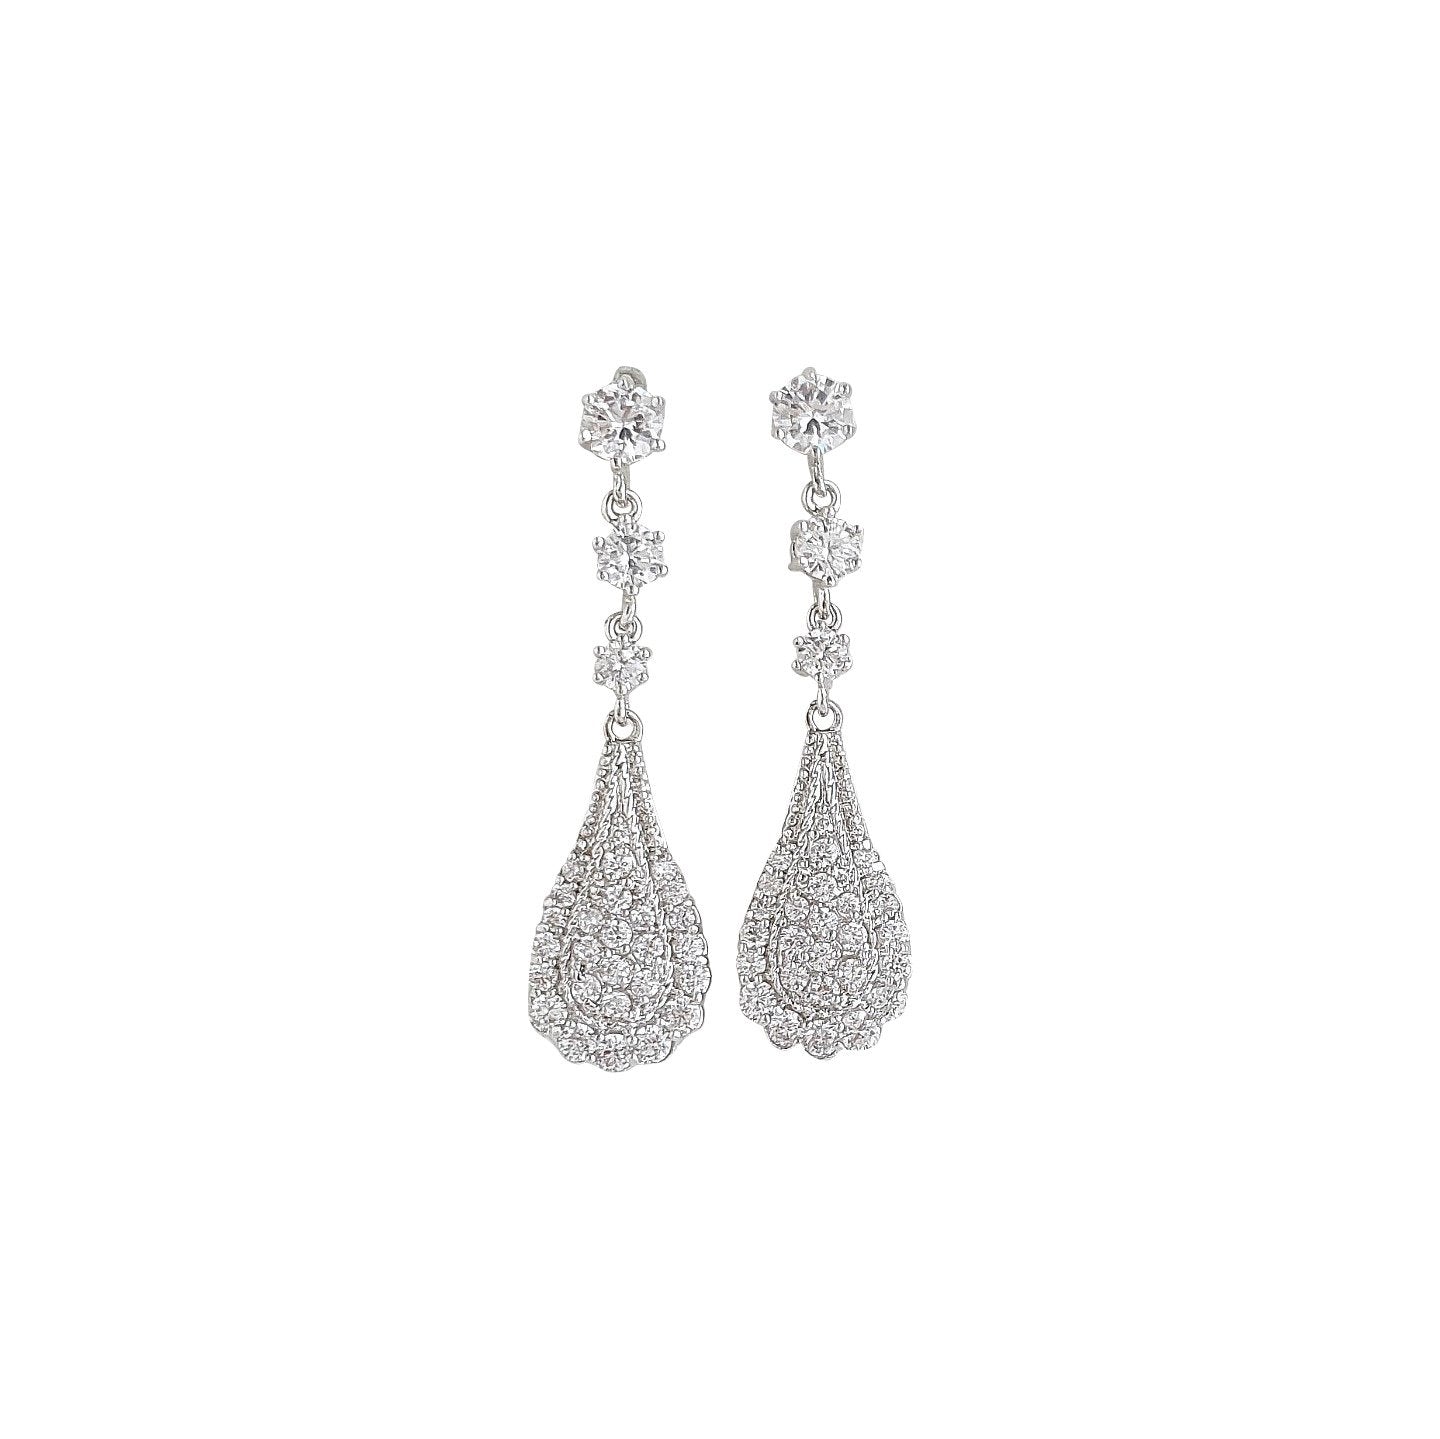 Pear Shaped Drop Earrings for Brides-Chloe - PoetryDesigns